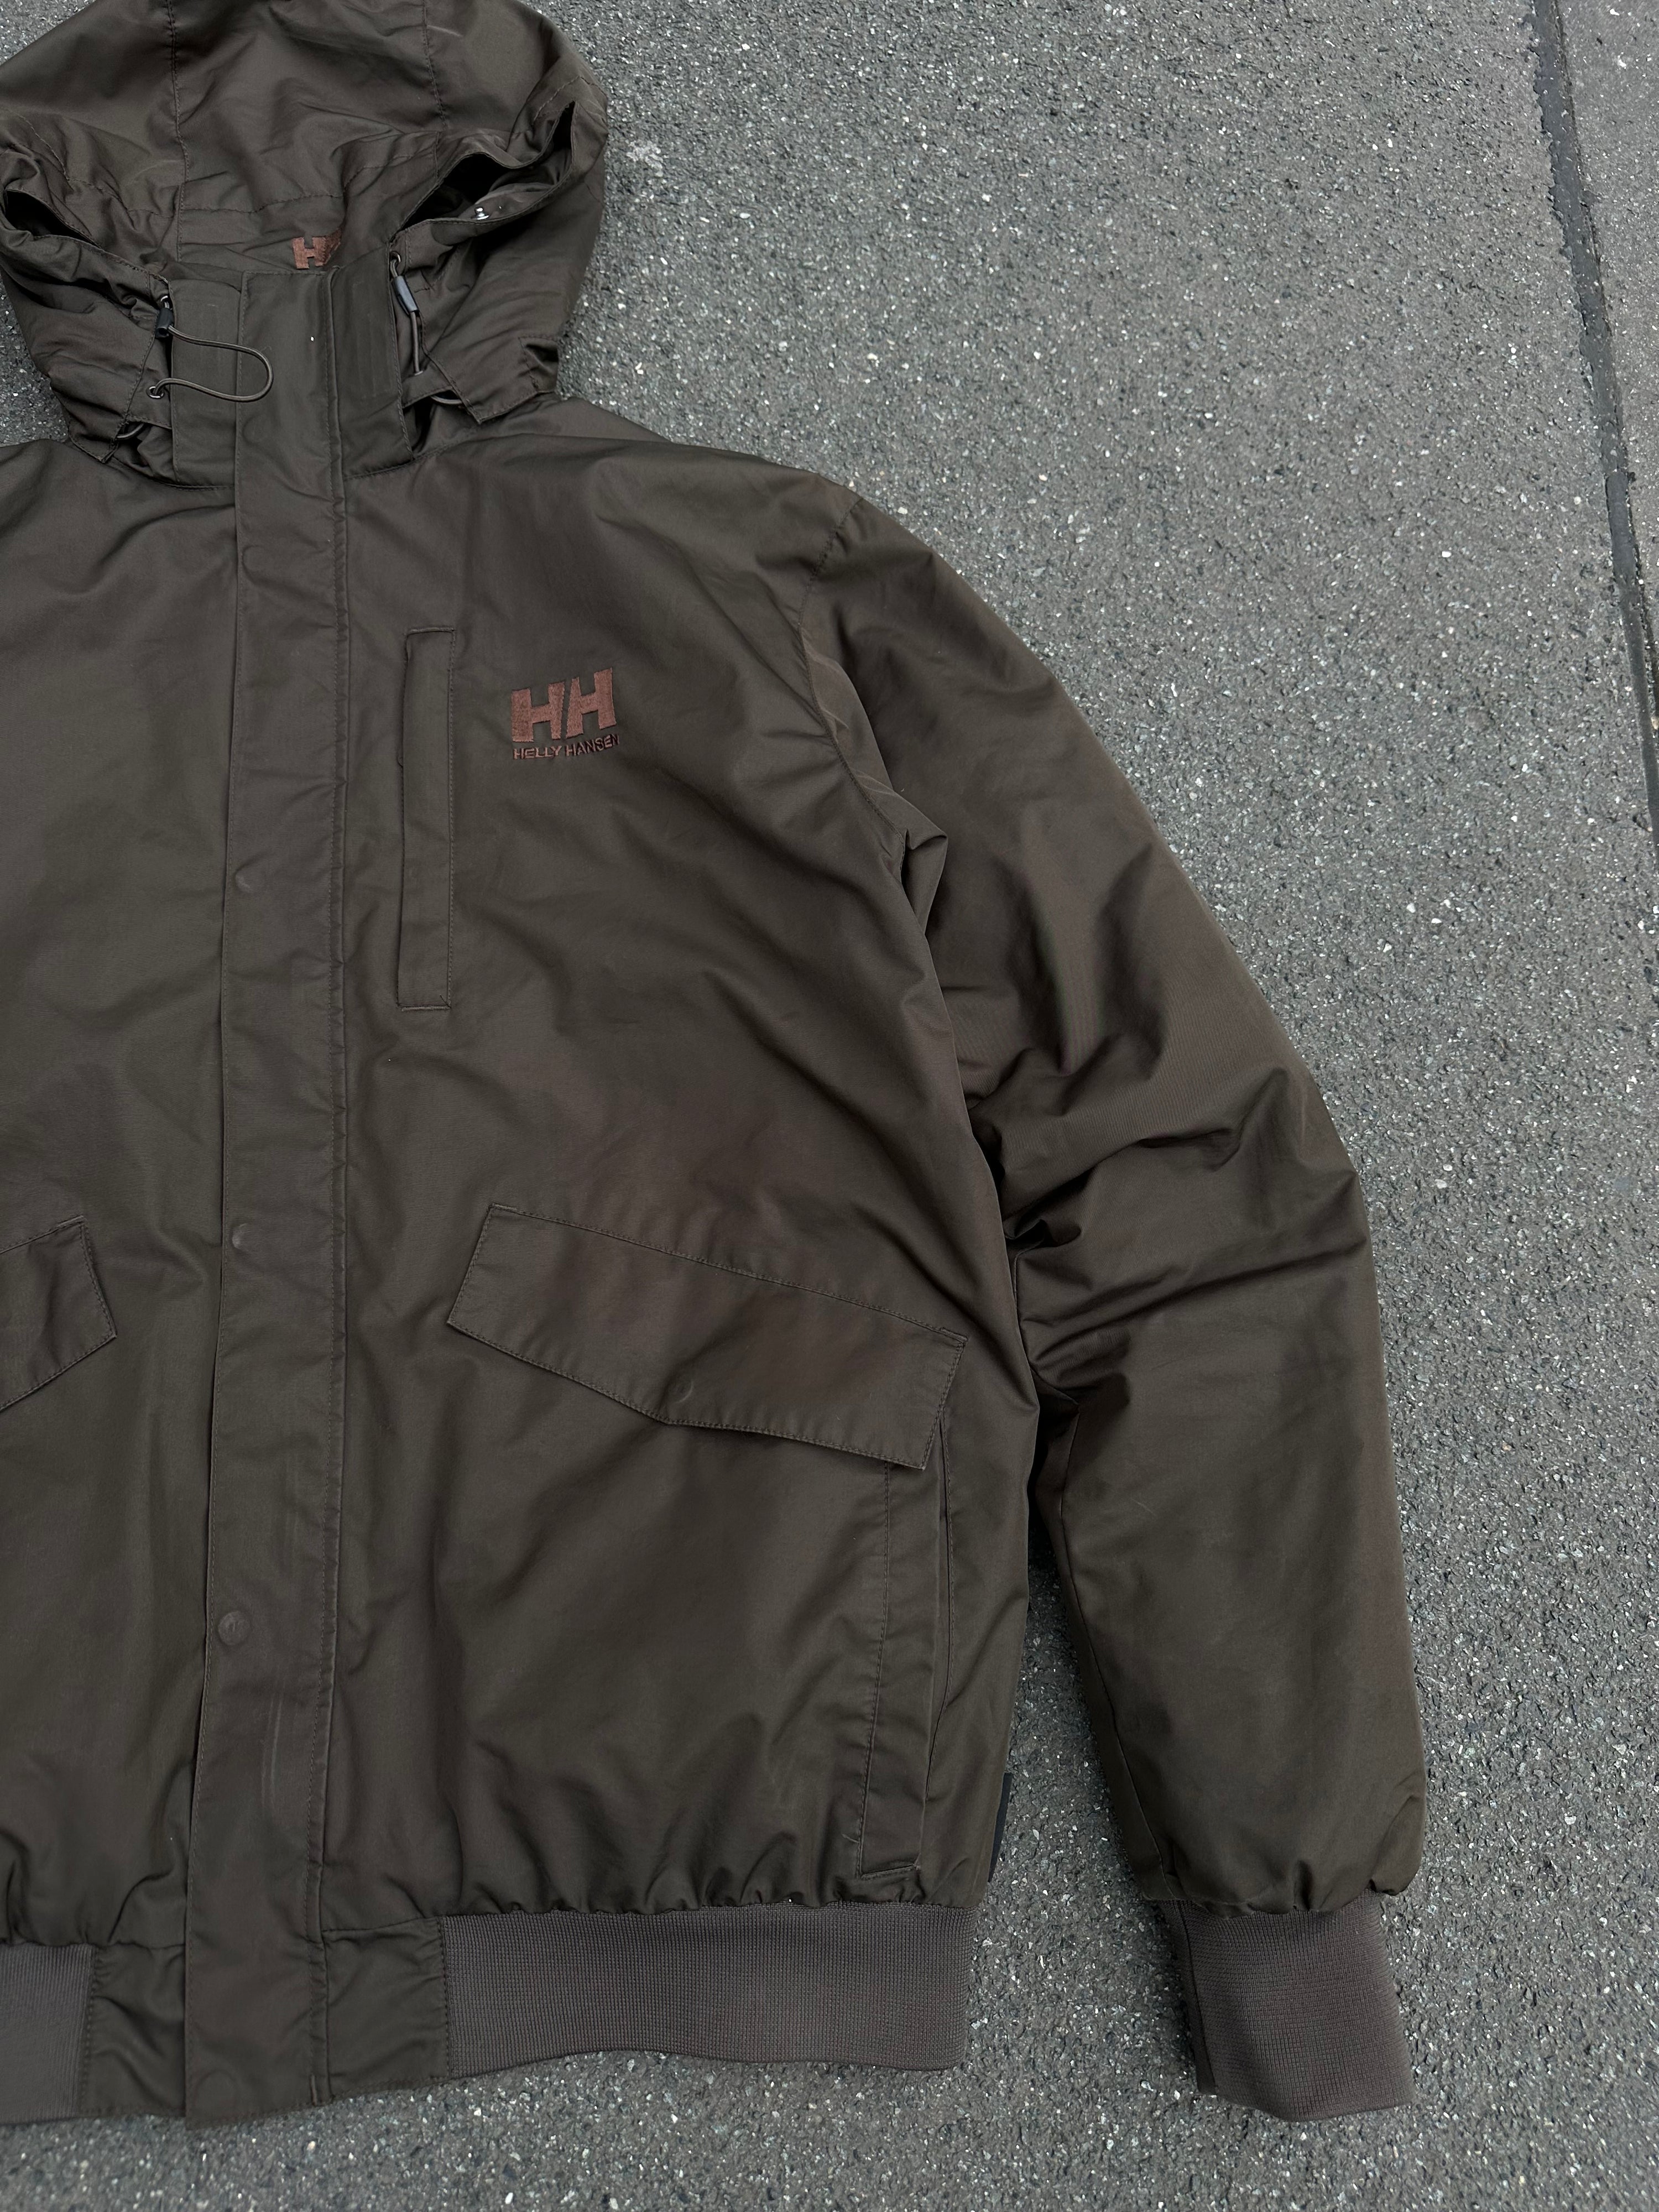 Helly Hansen Techwear Jacket (L/XL)